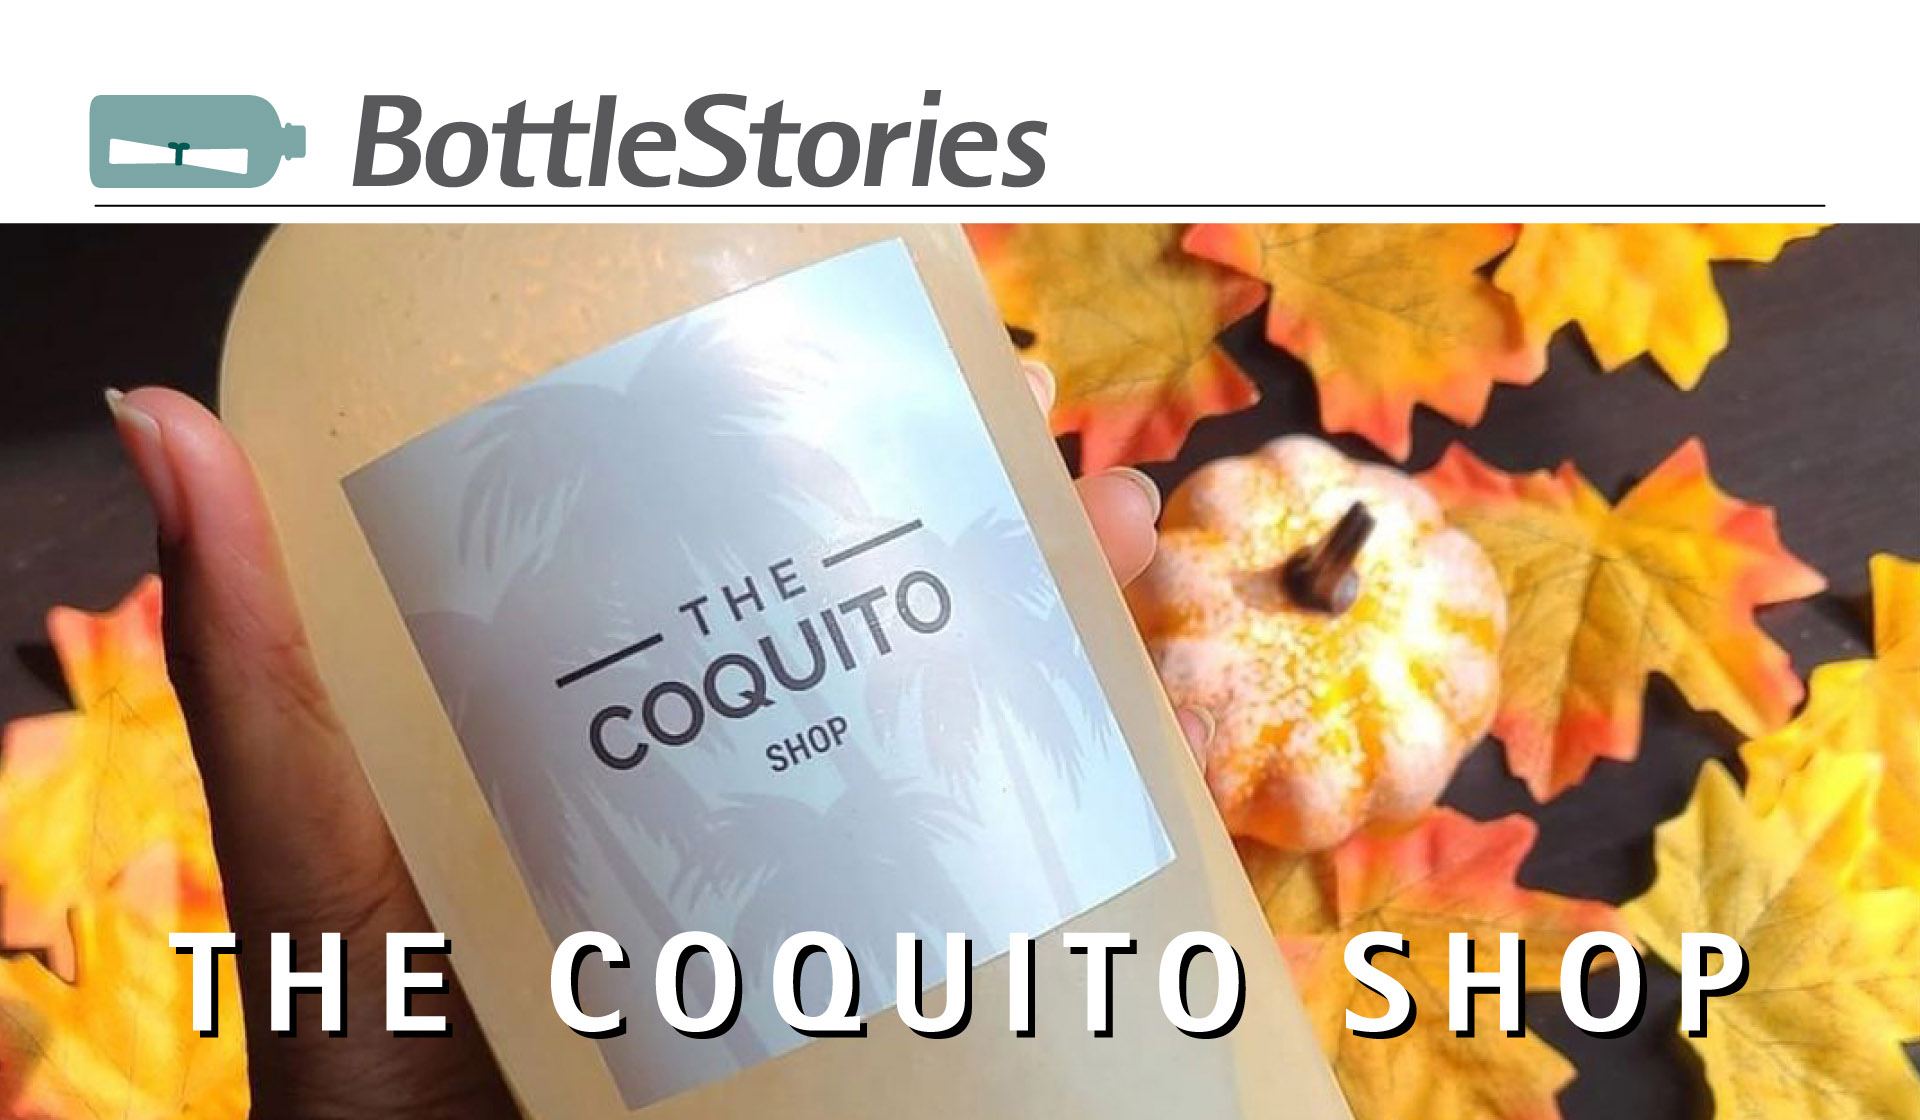 The Coquito Shop